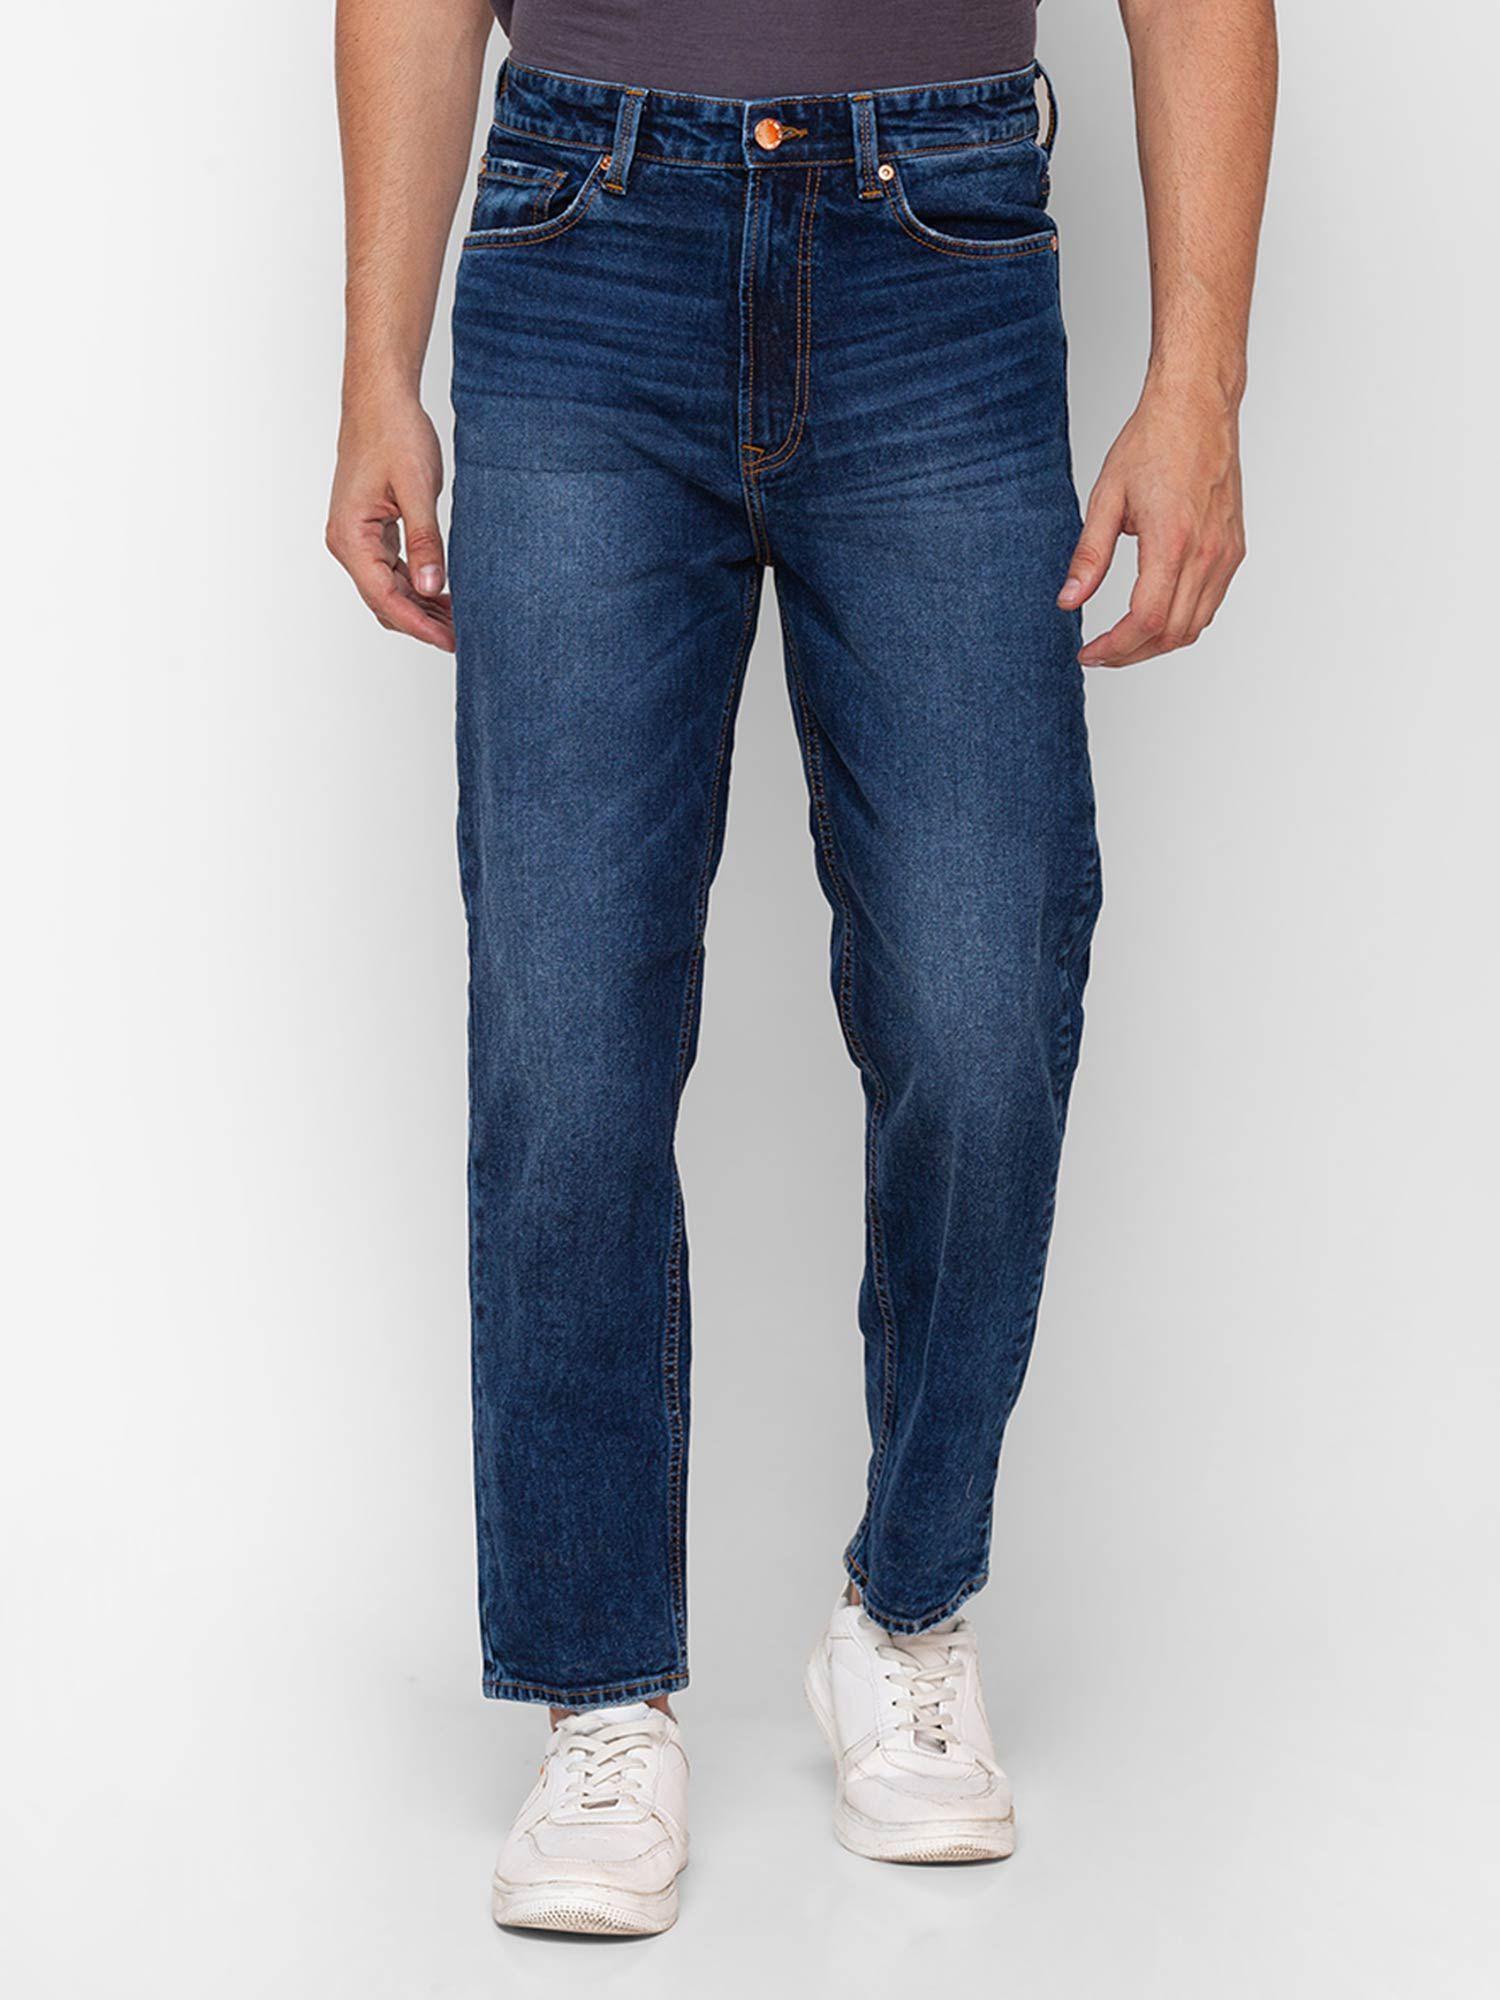 mid-blue-cotton-loose-fit-regular-length-jeans-for-men-(renato)